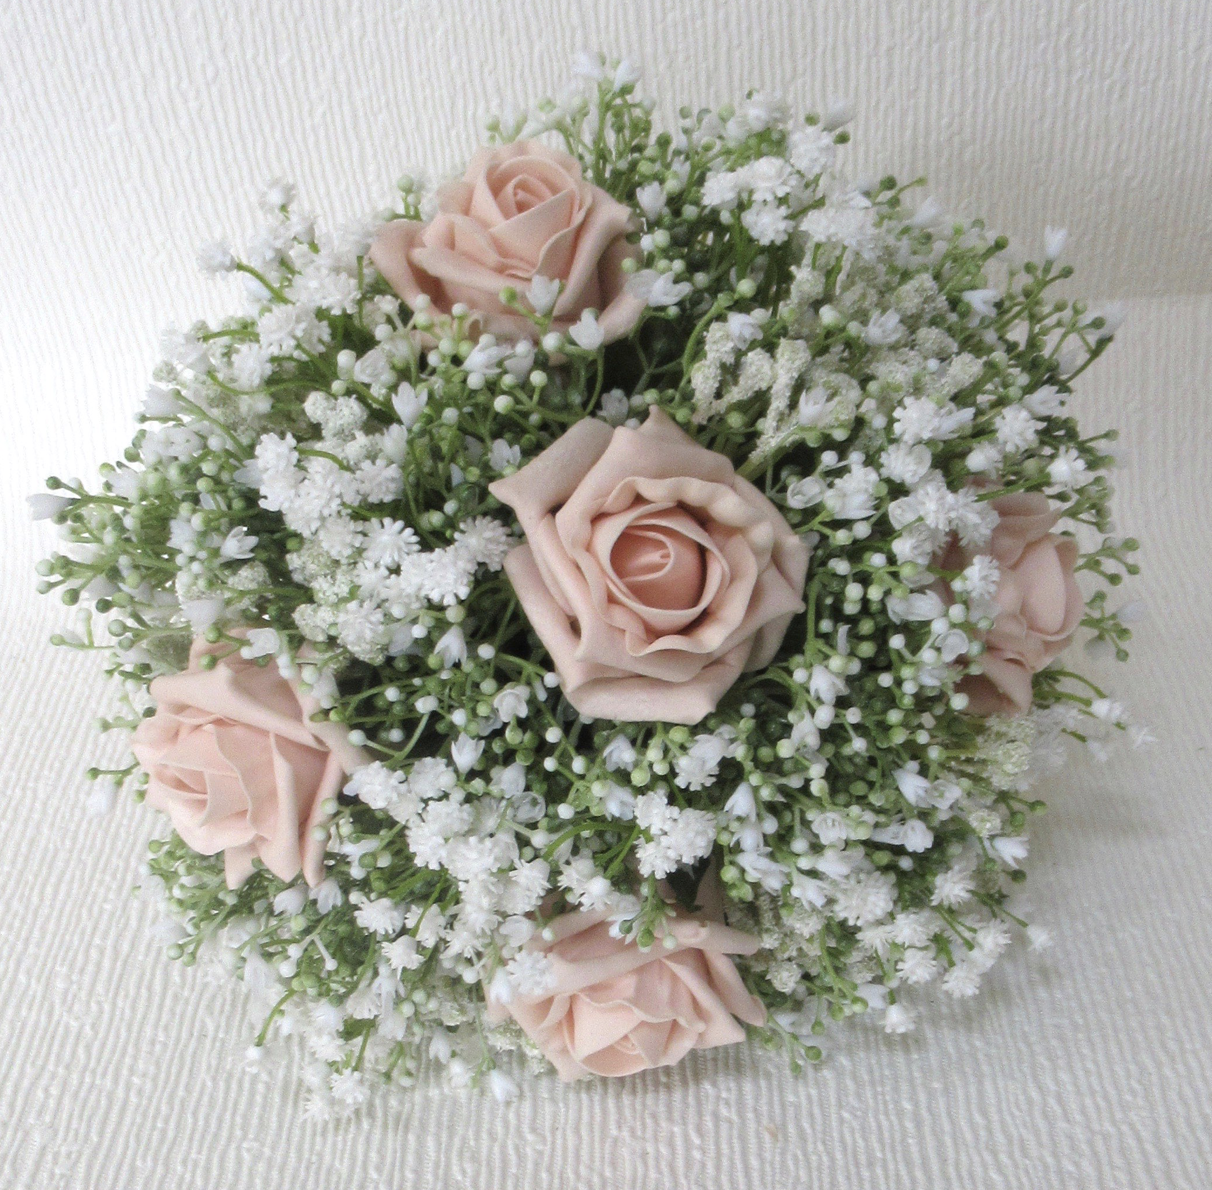 Rose and gypsophila bridesmaid bouquet, rustic bridesmaid flowers